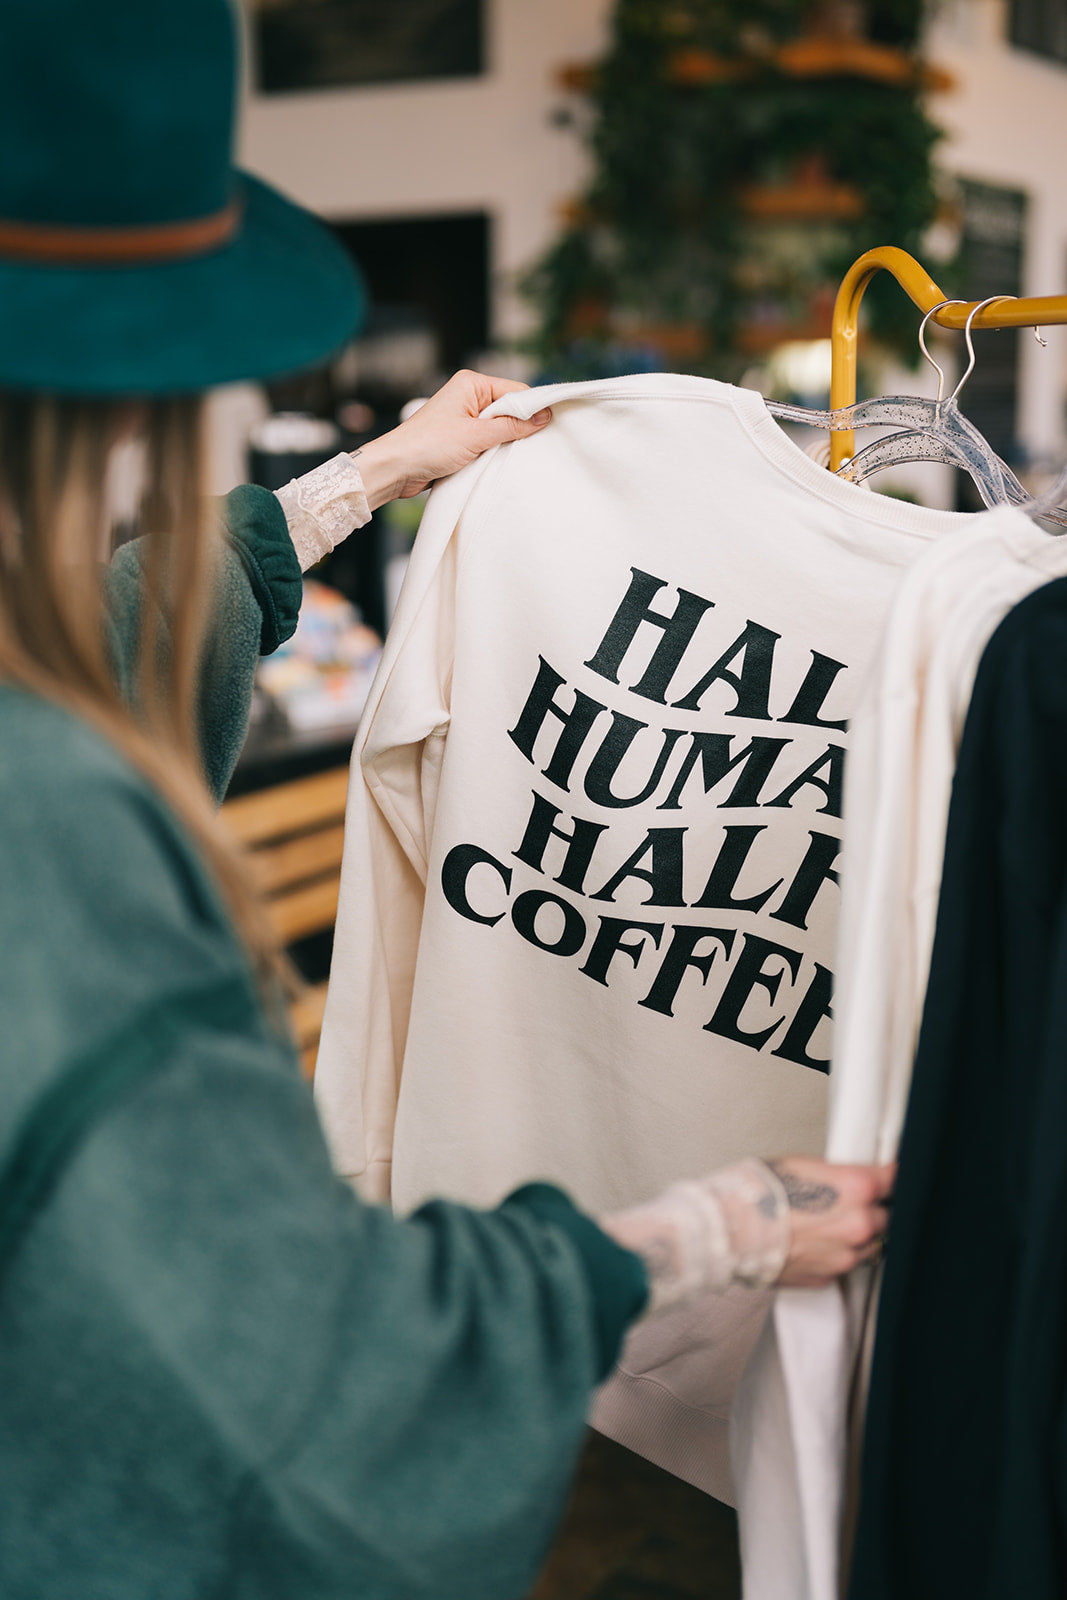 Half Human Half Coffee Crewneck